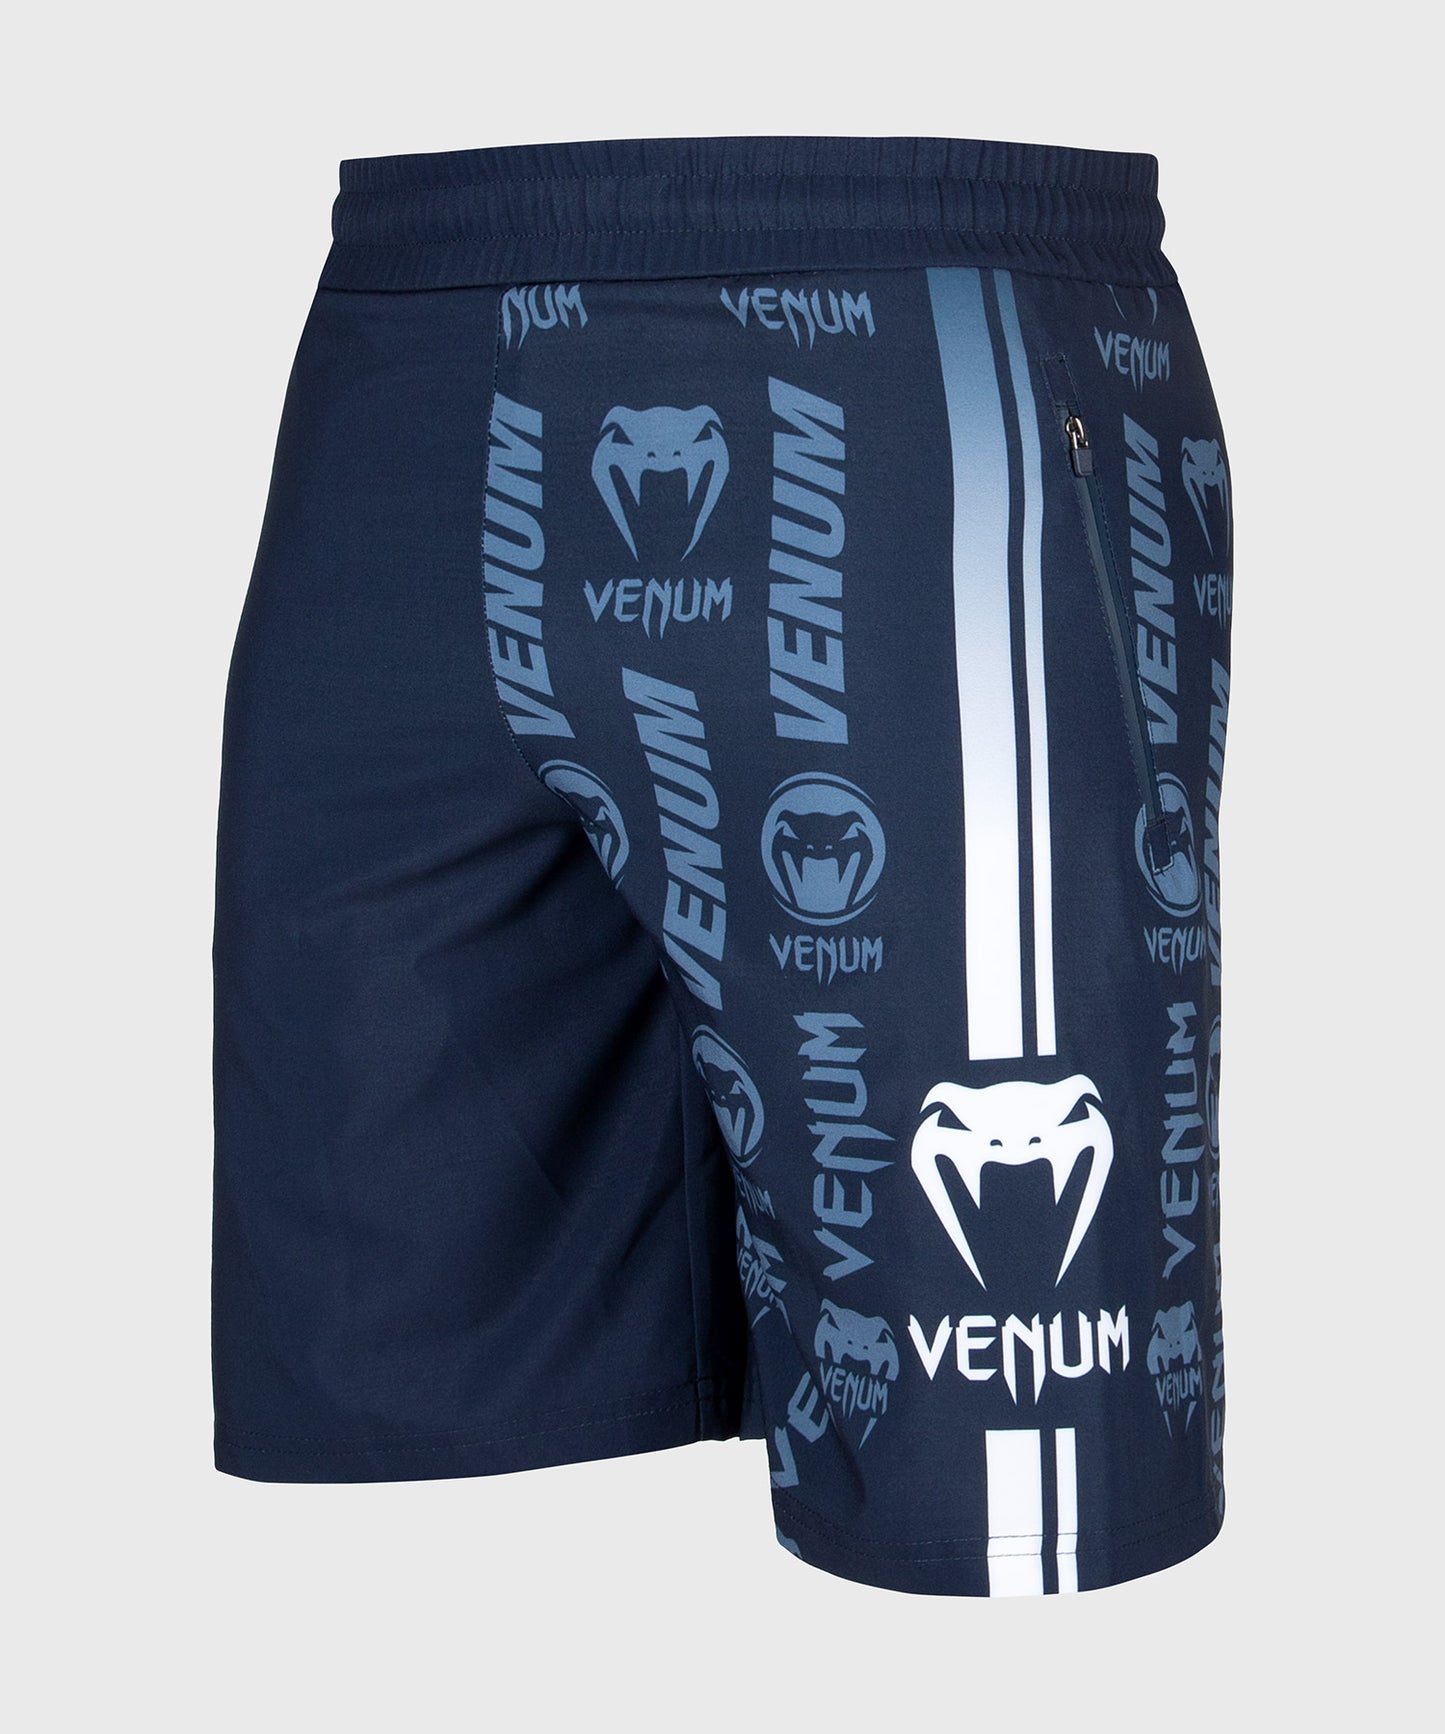 Fitness-Shorts Venum Logos - Marineblau/Weiß